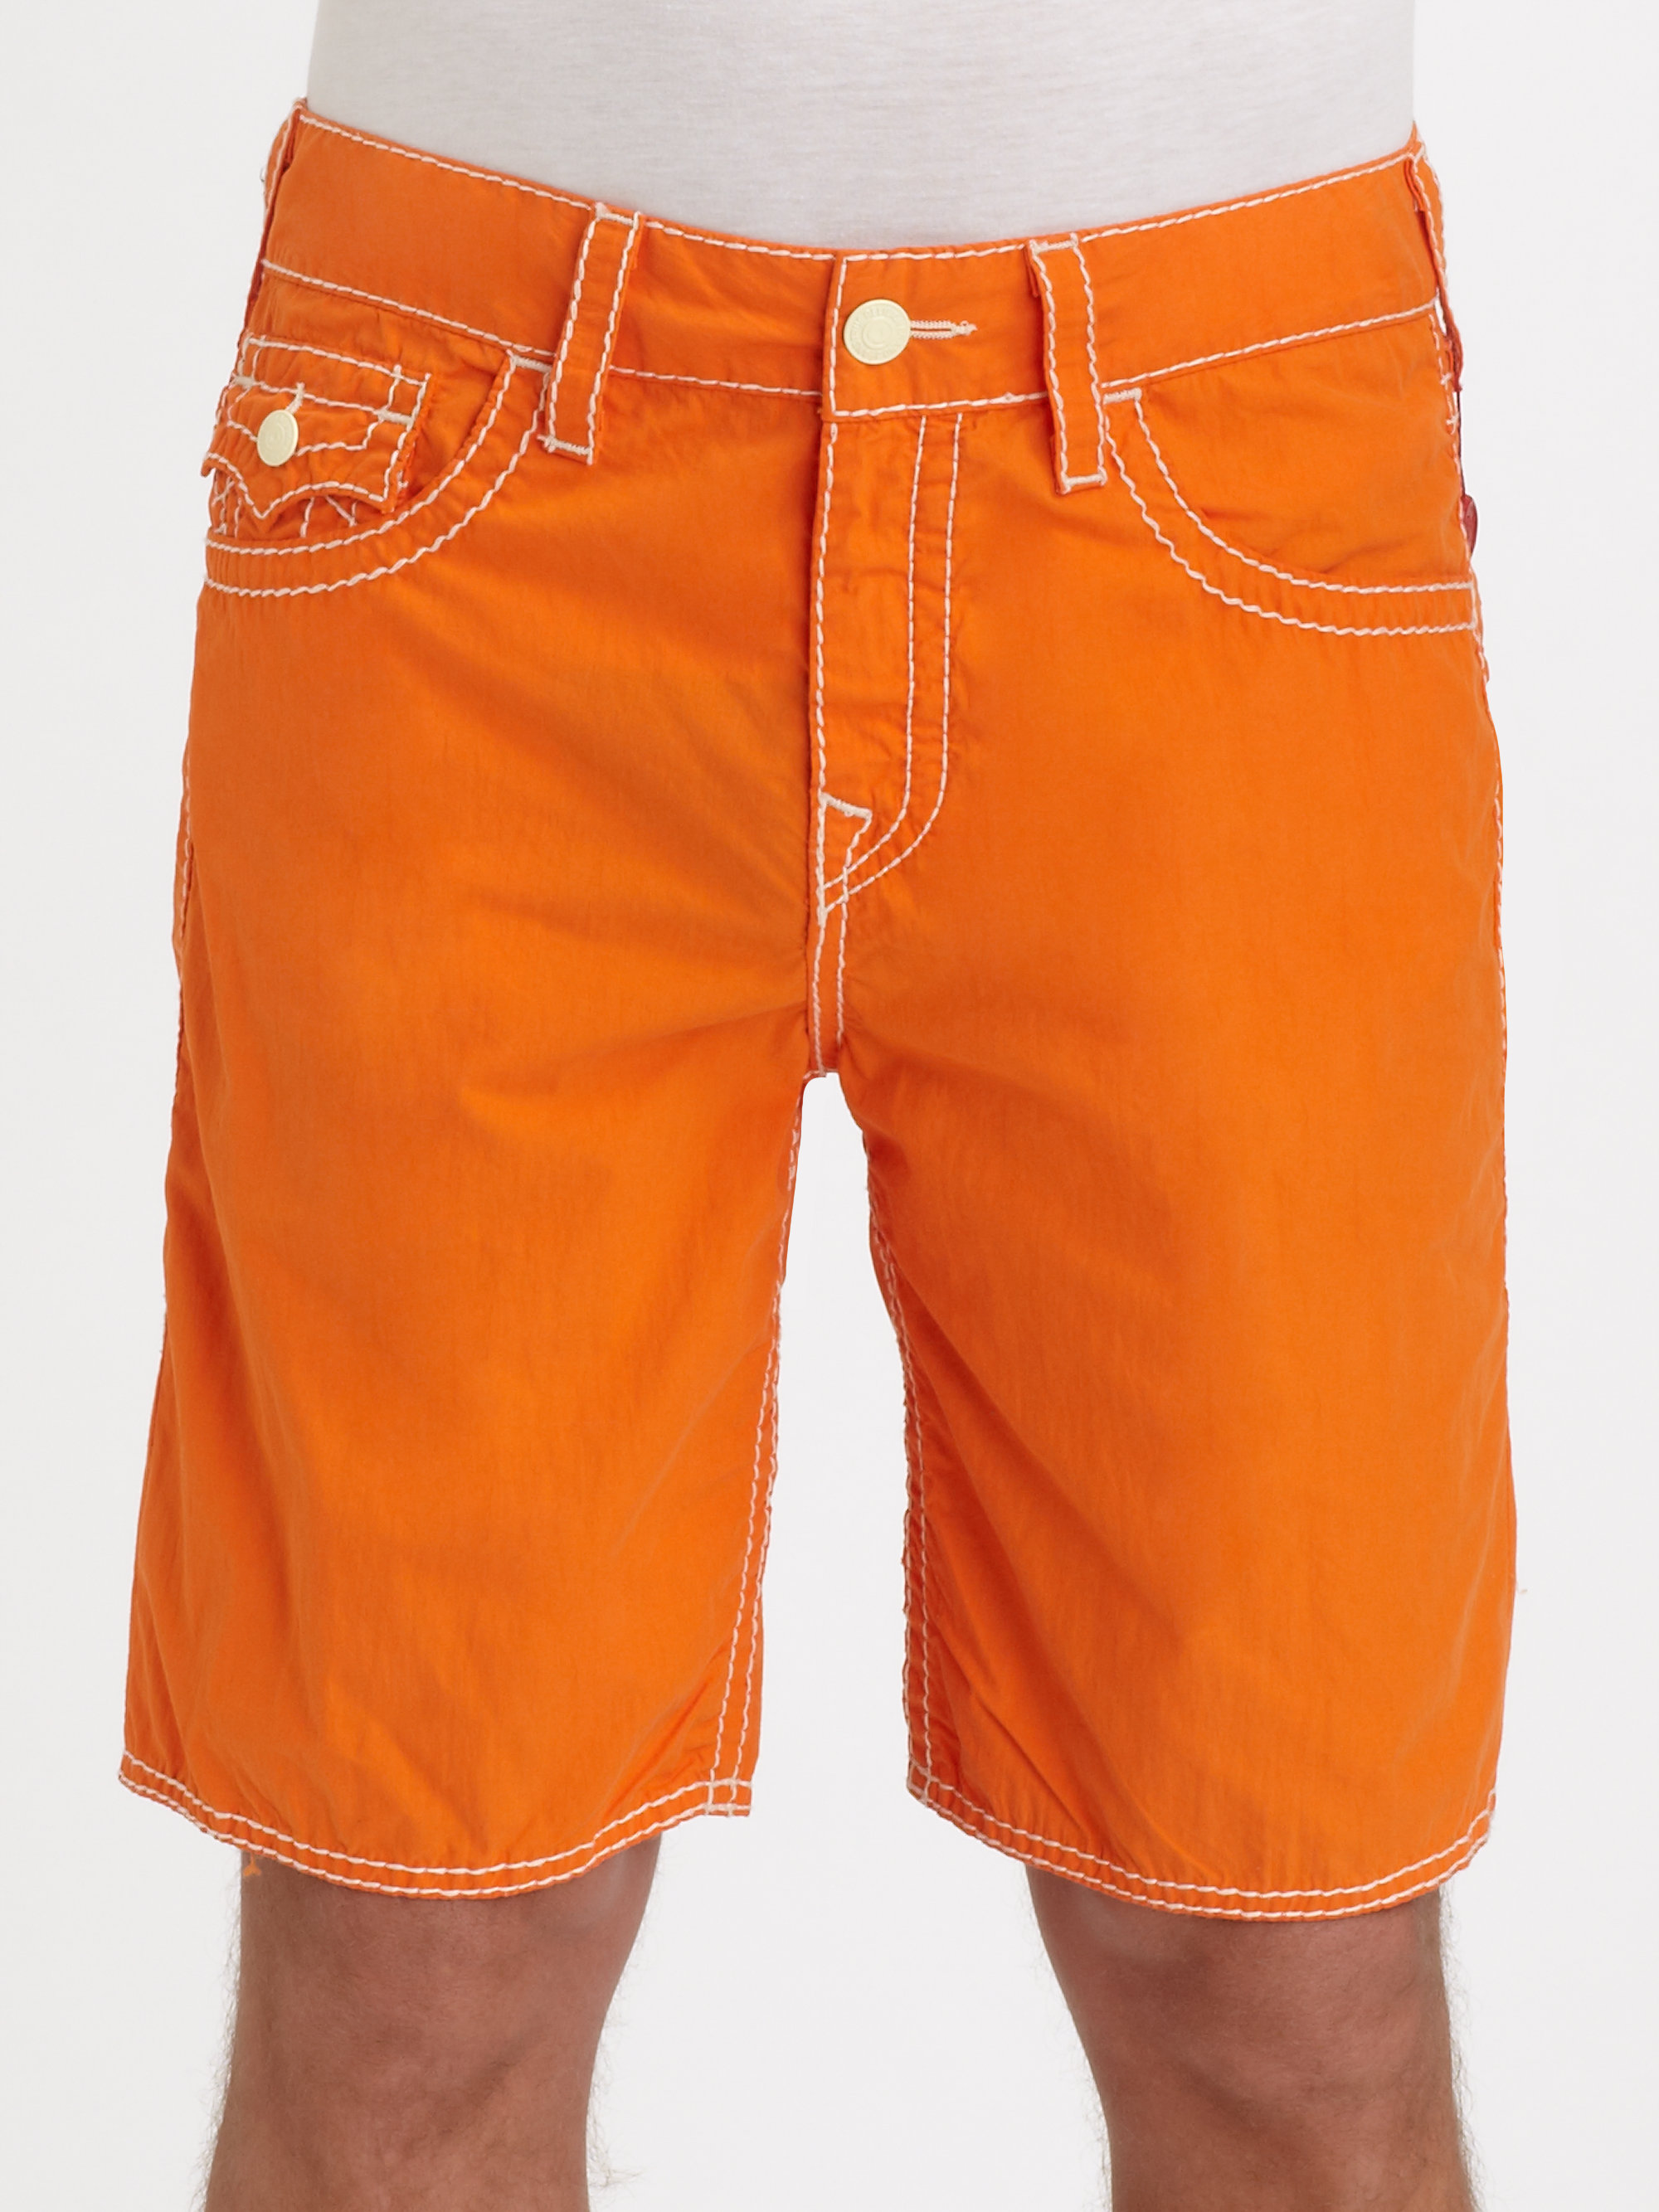 orange true religion shorts